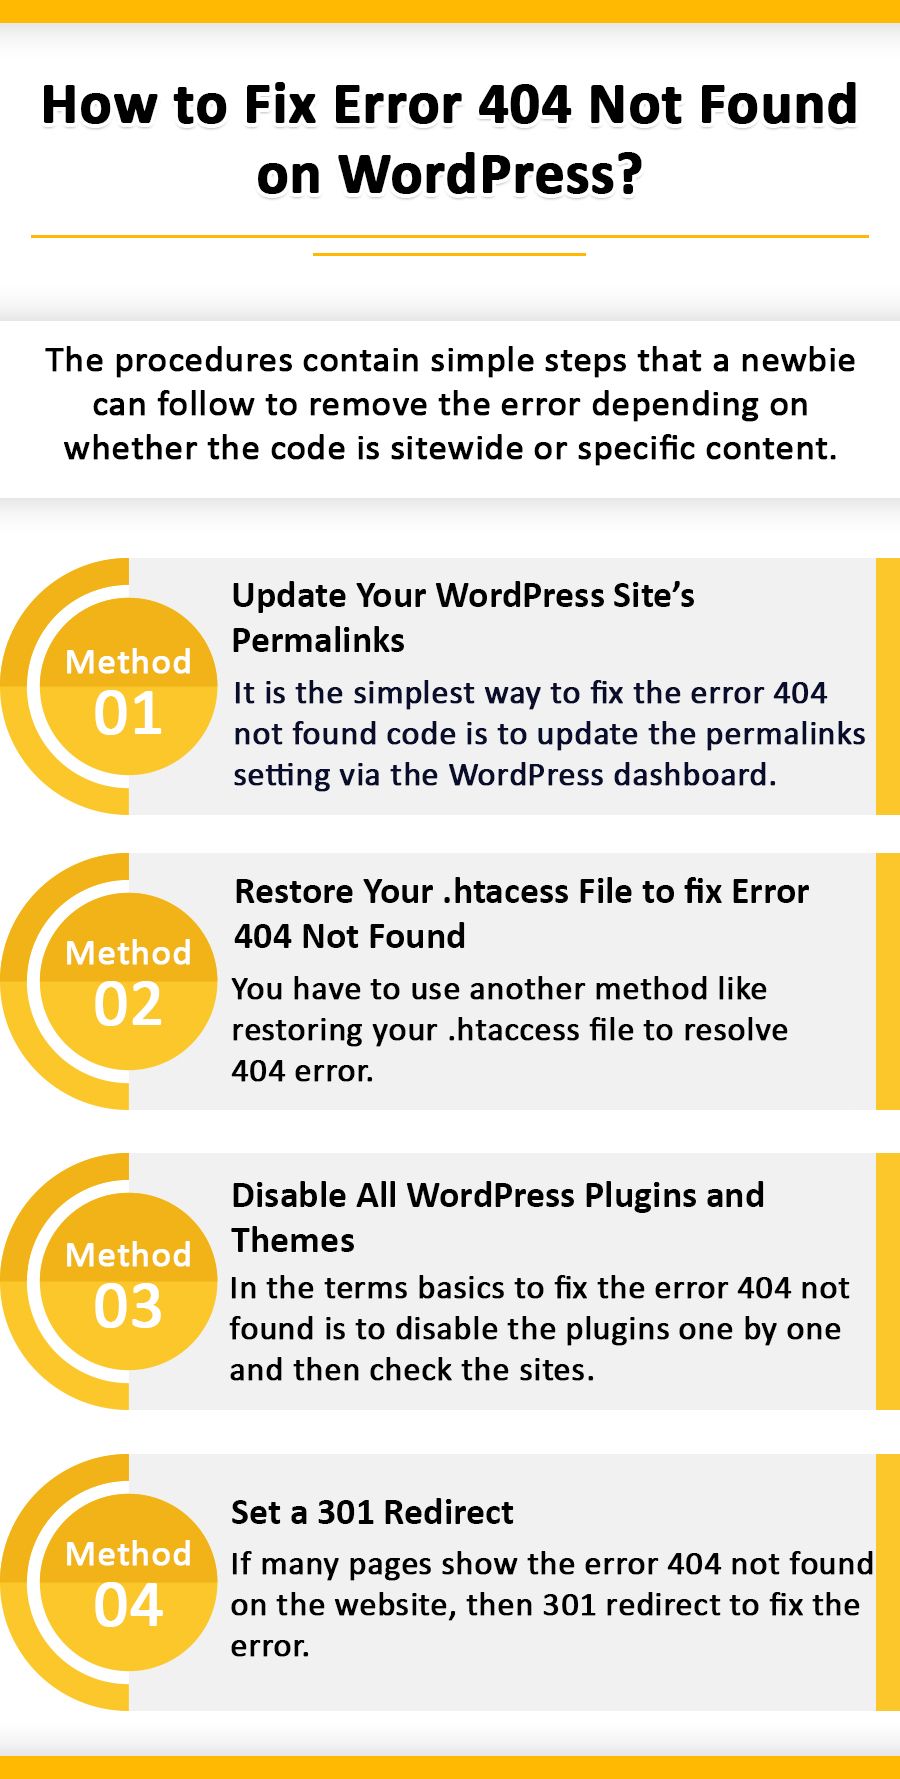 How to Fix Error 404 Not Found on WordPress